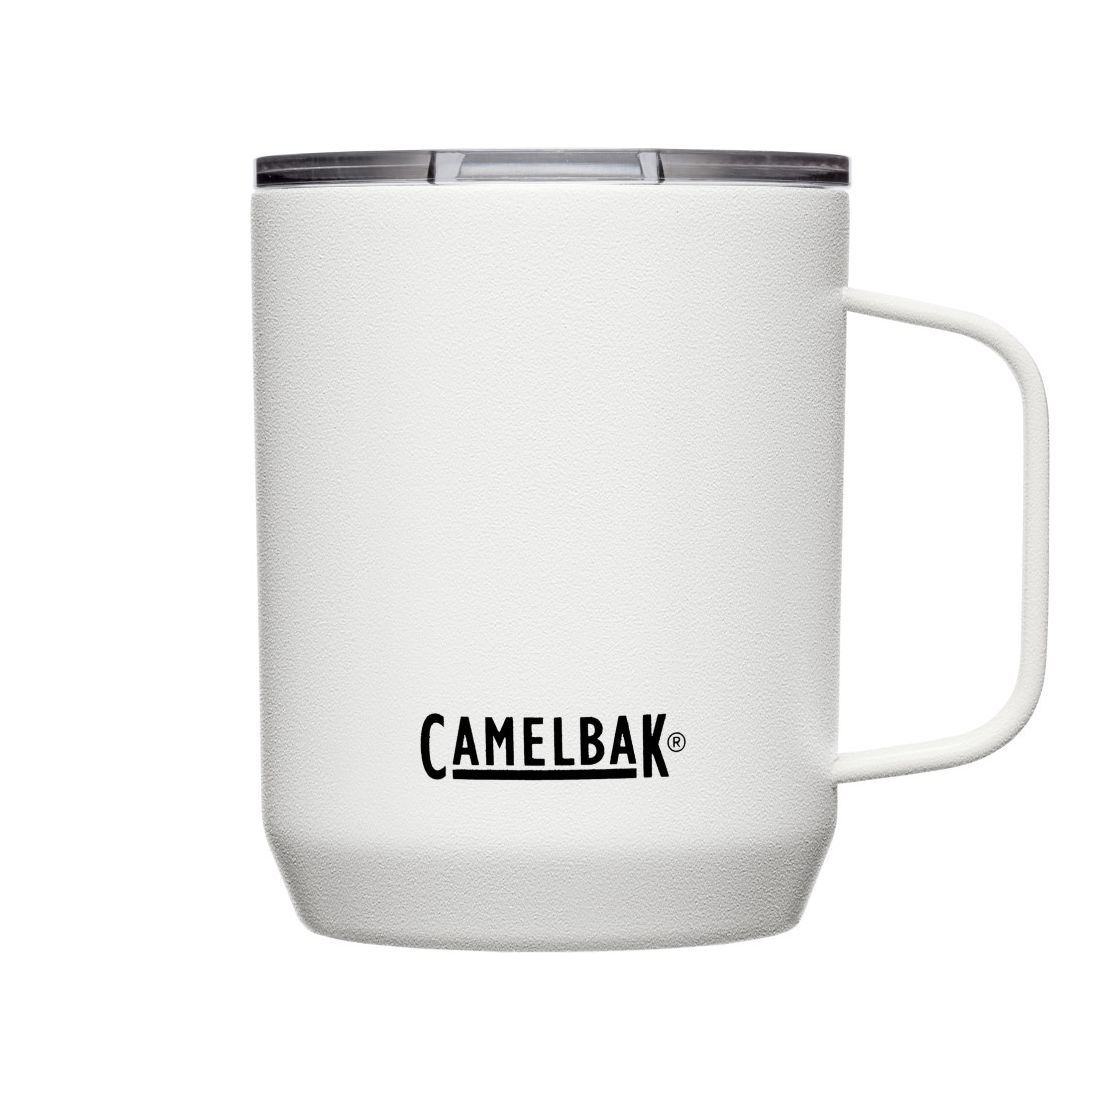 Camelbak Camp Mug Stainless Steel Vacuum Insulated 12Oz white